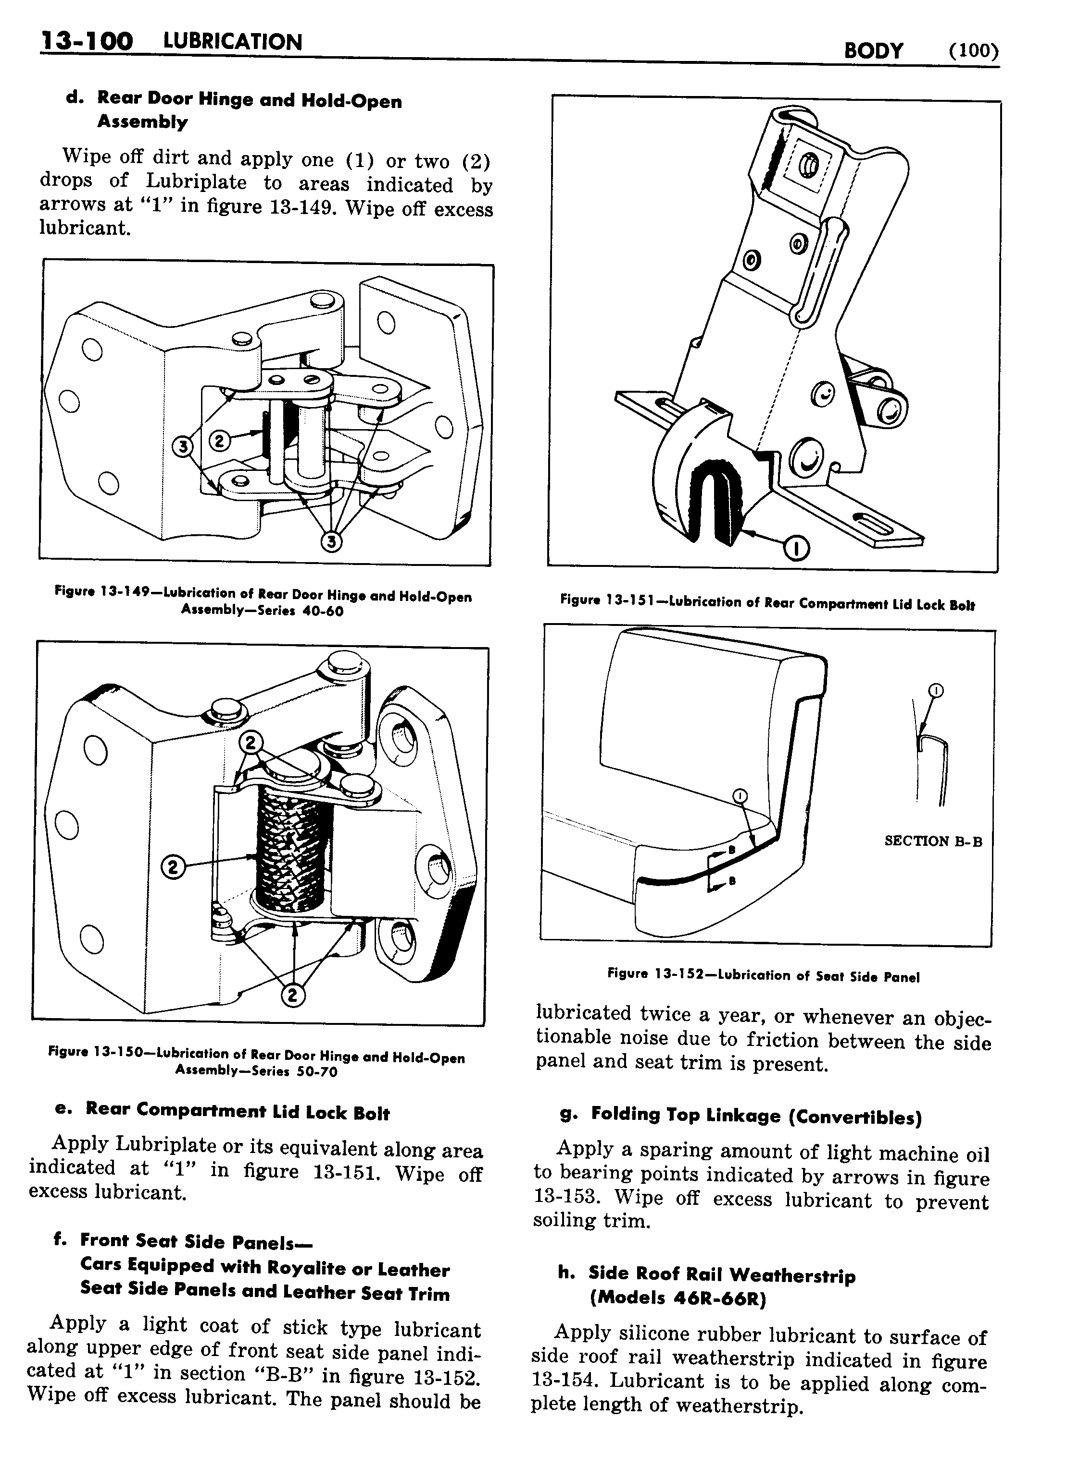 n_1957 Buick Body Service Manual-102-102.jpg